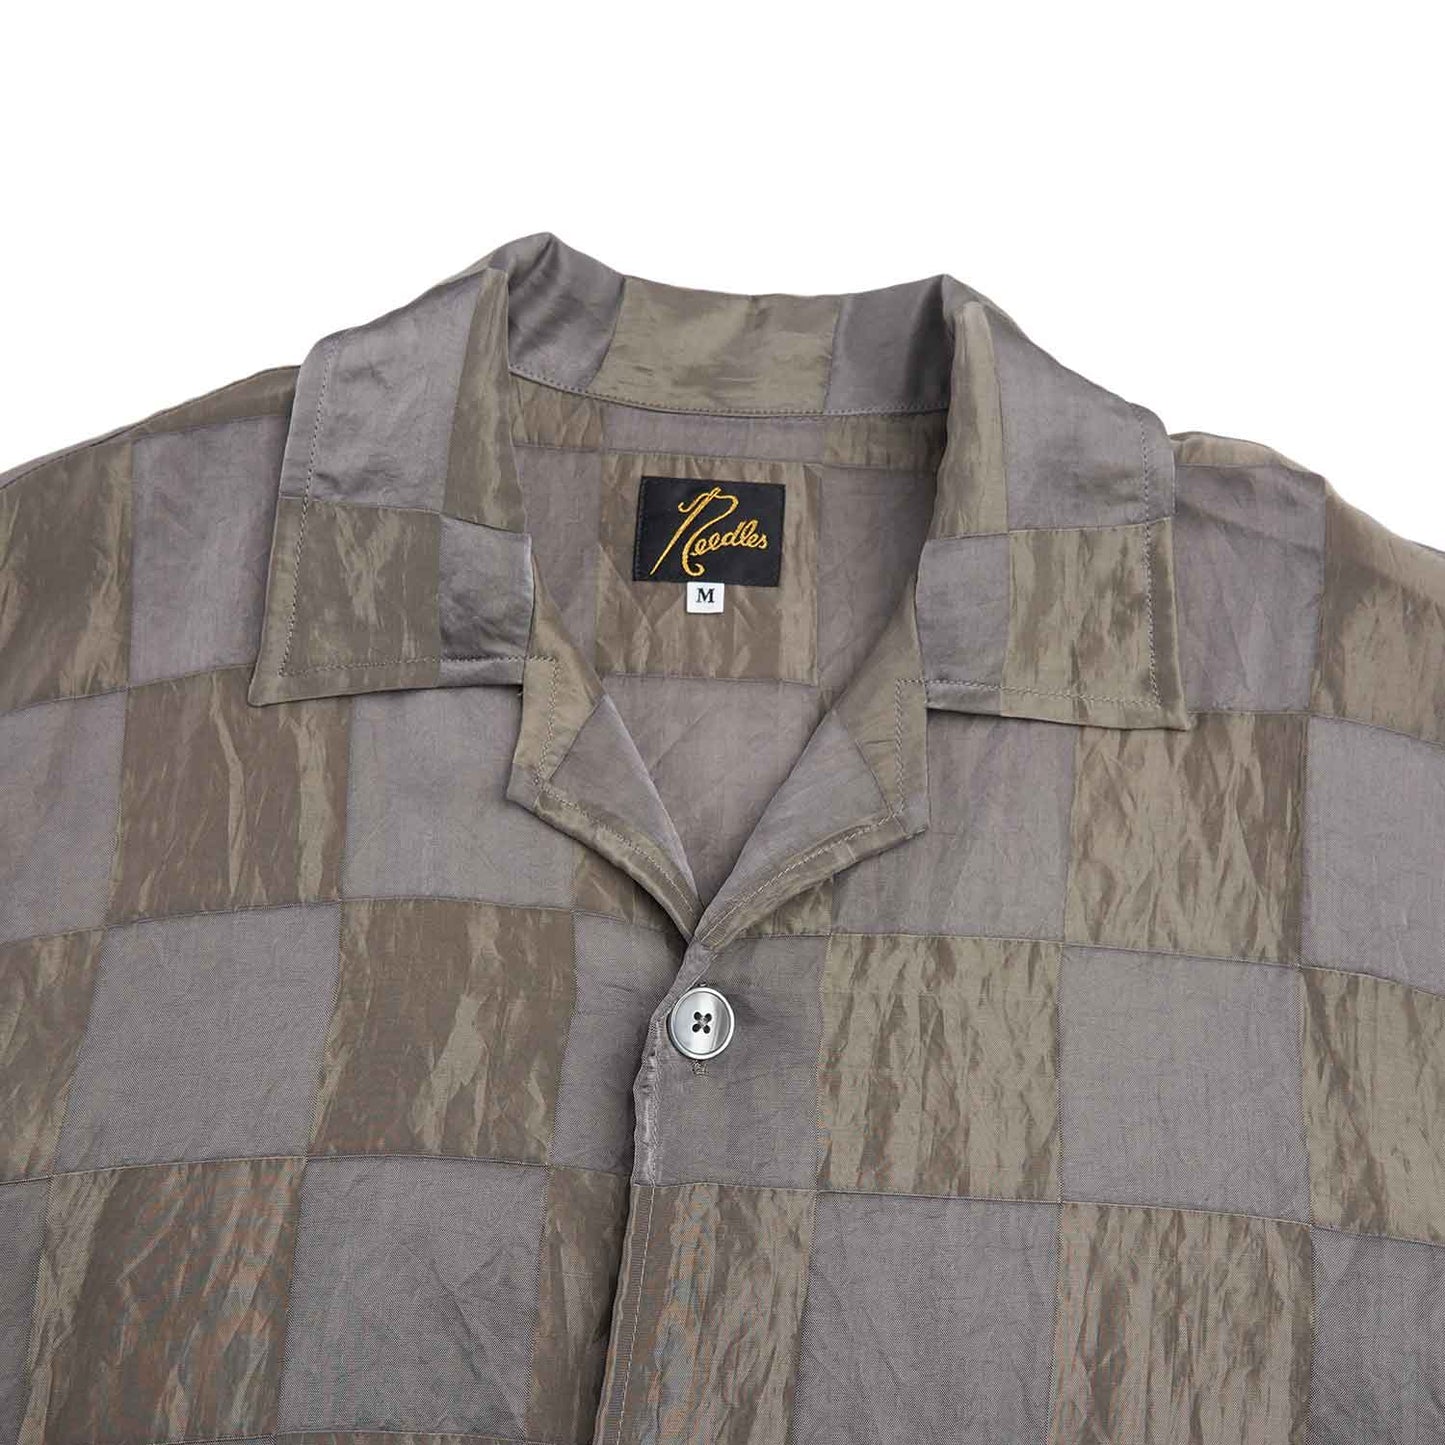 needles cabana checker shirt (grey)